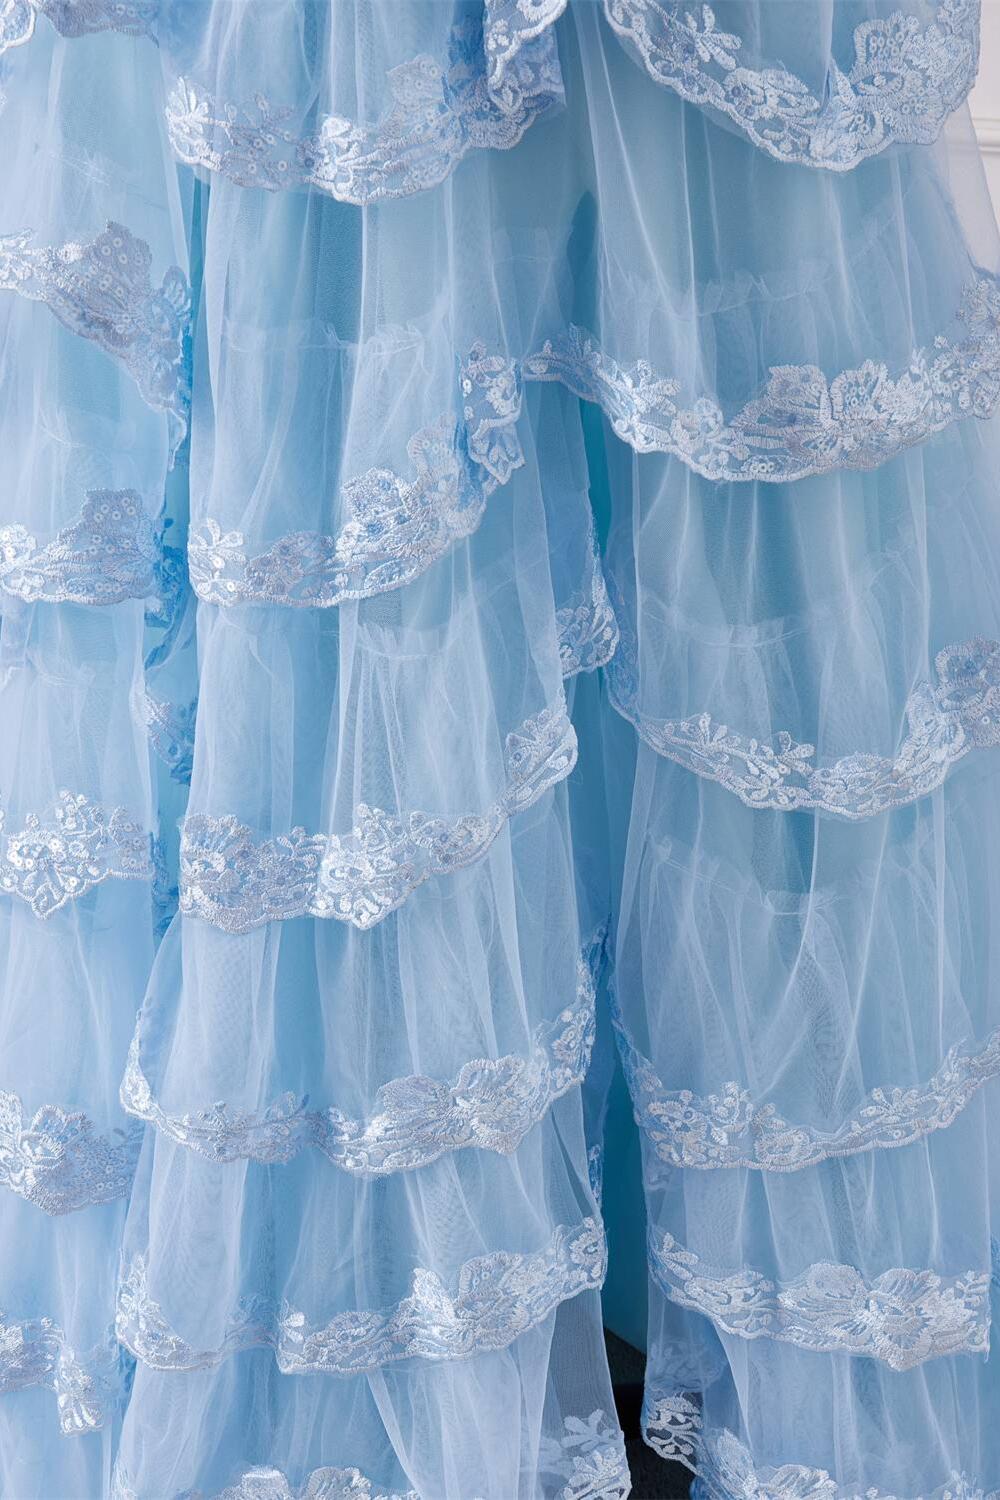 Straps Light Blue Appliques Ruffles Long Formal Gown